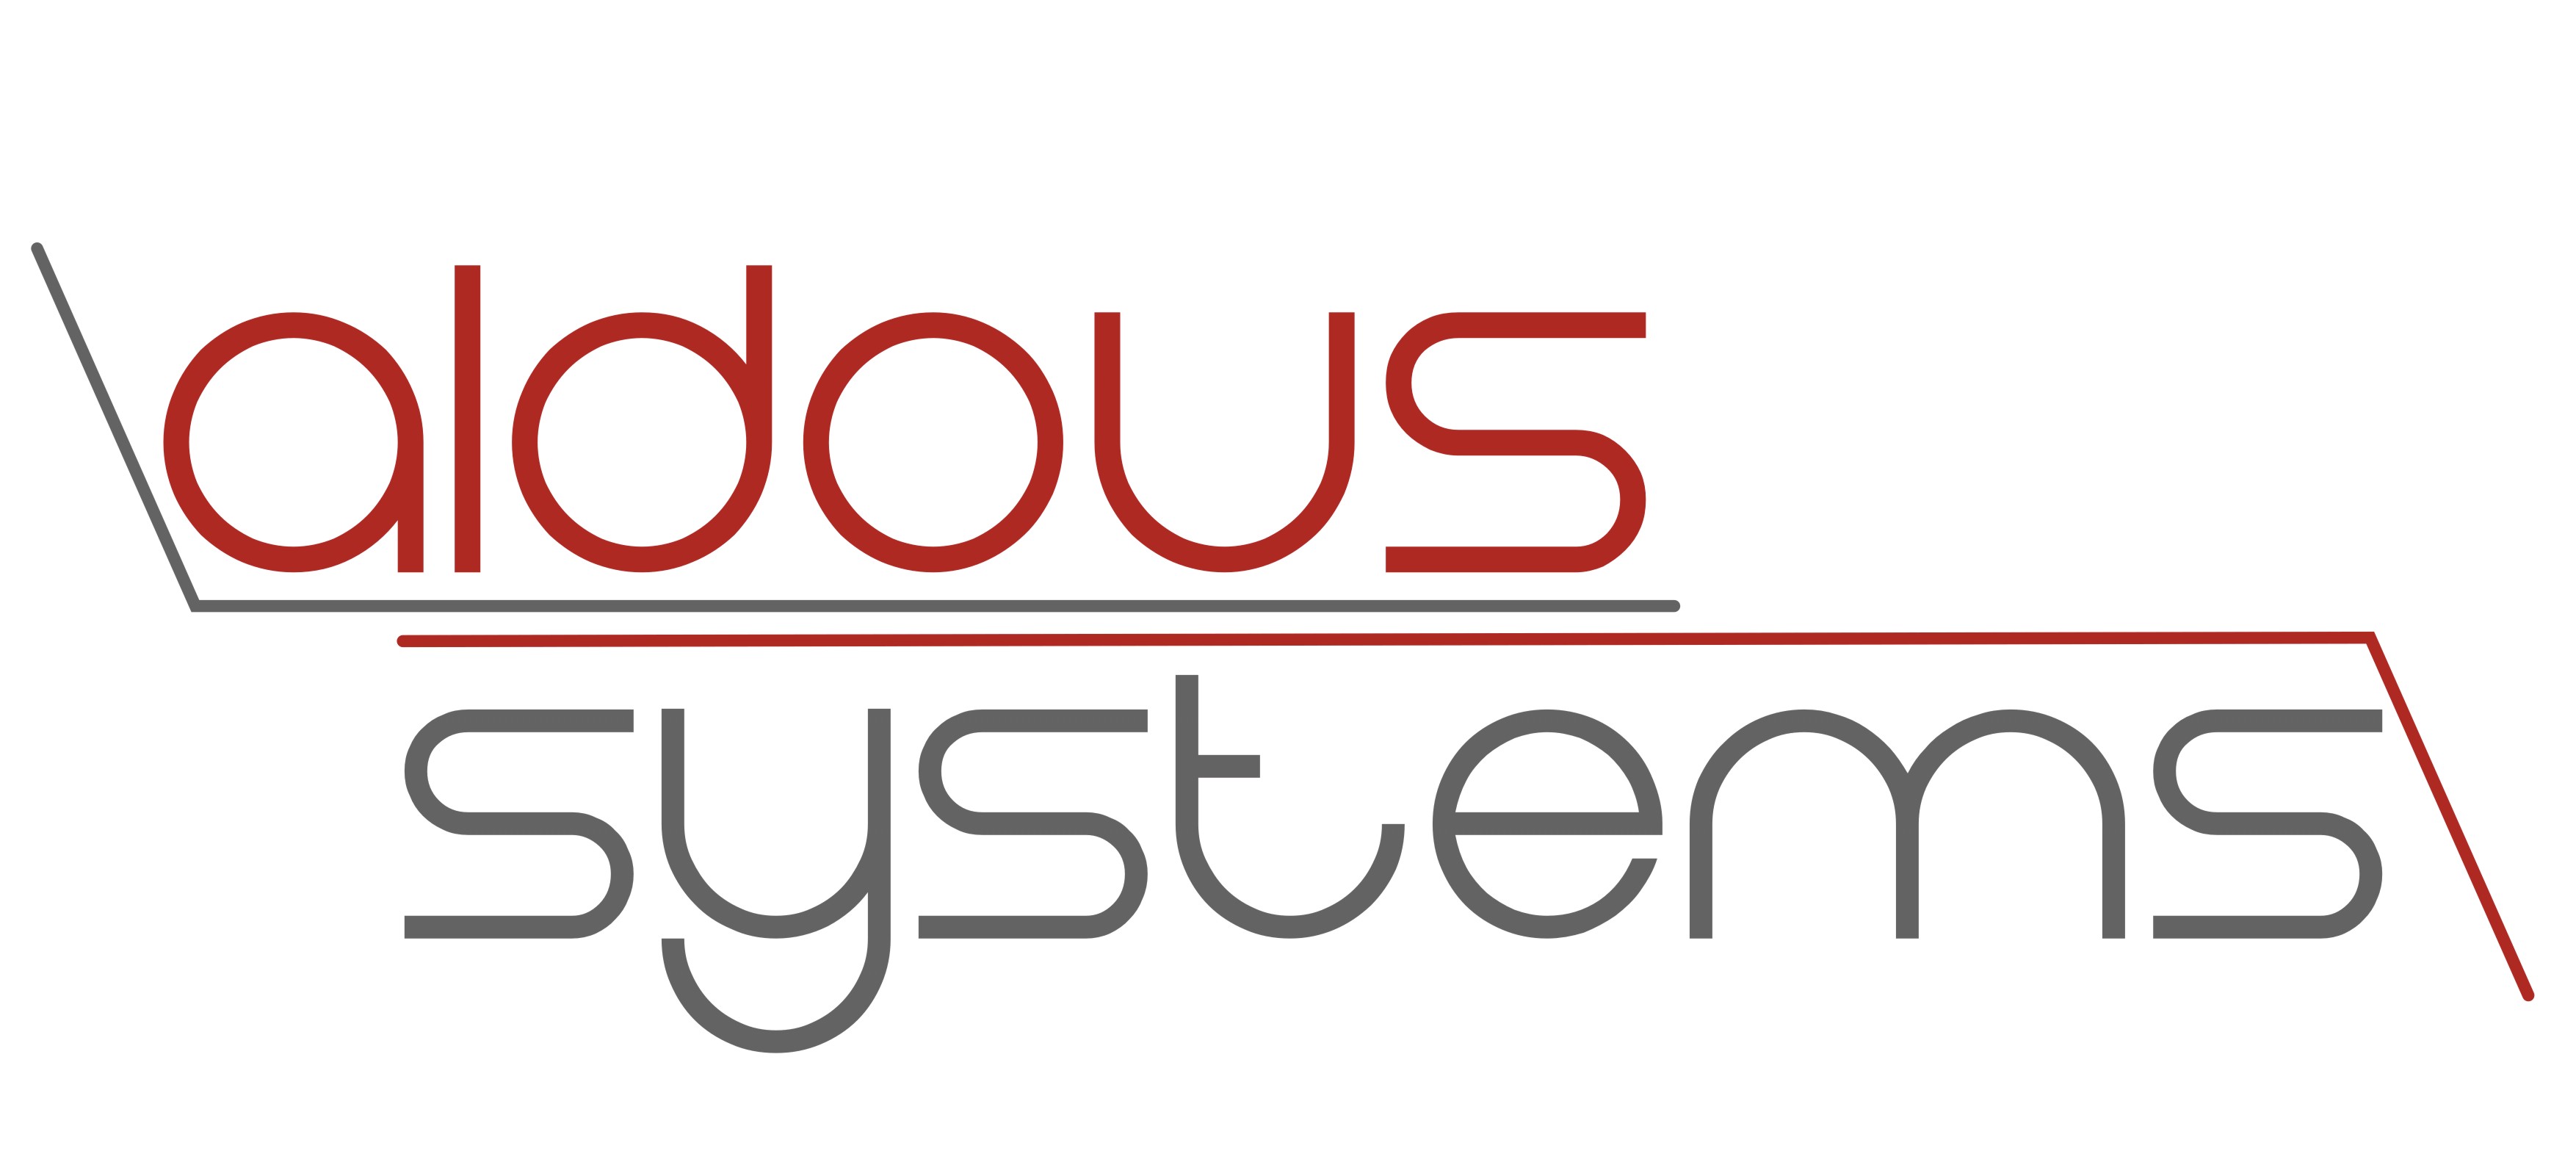 Aldous Systems (Europe) Ltd